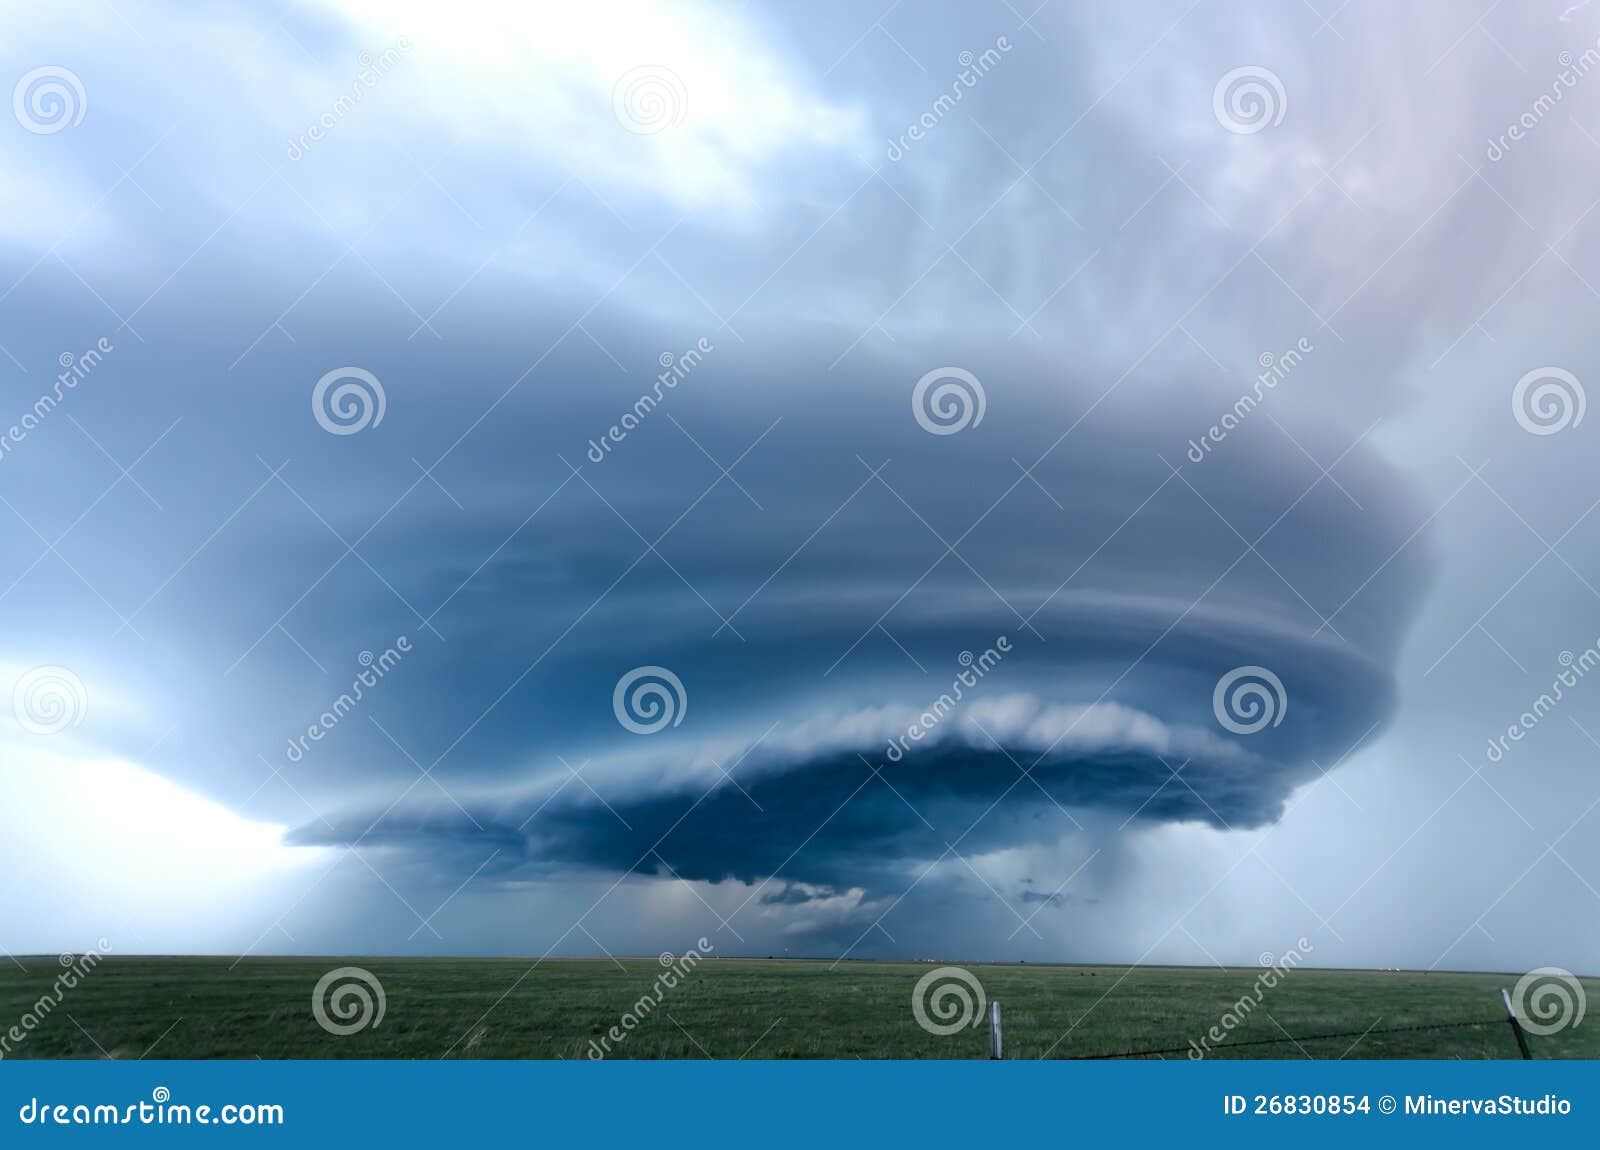 supercell storm near vega - texas